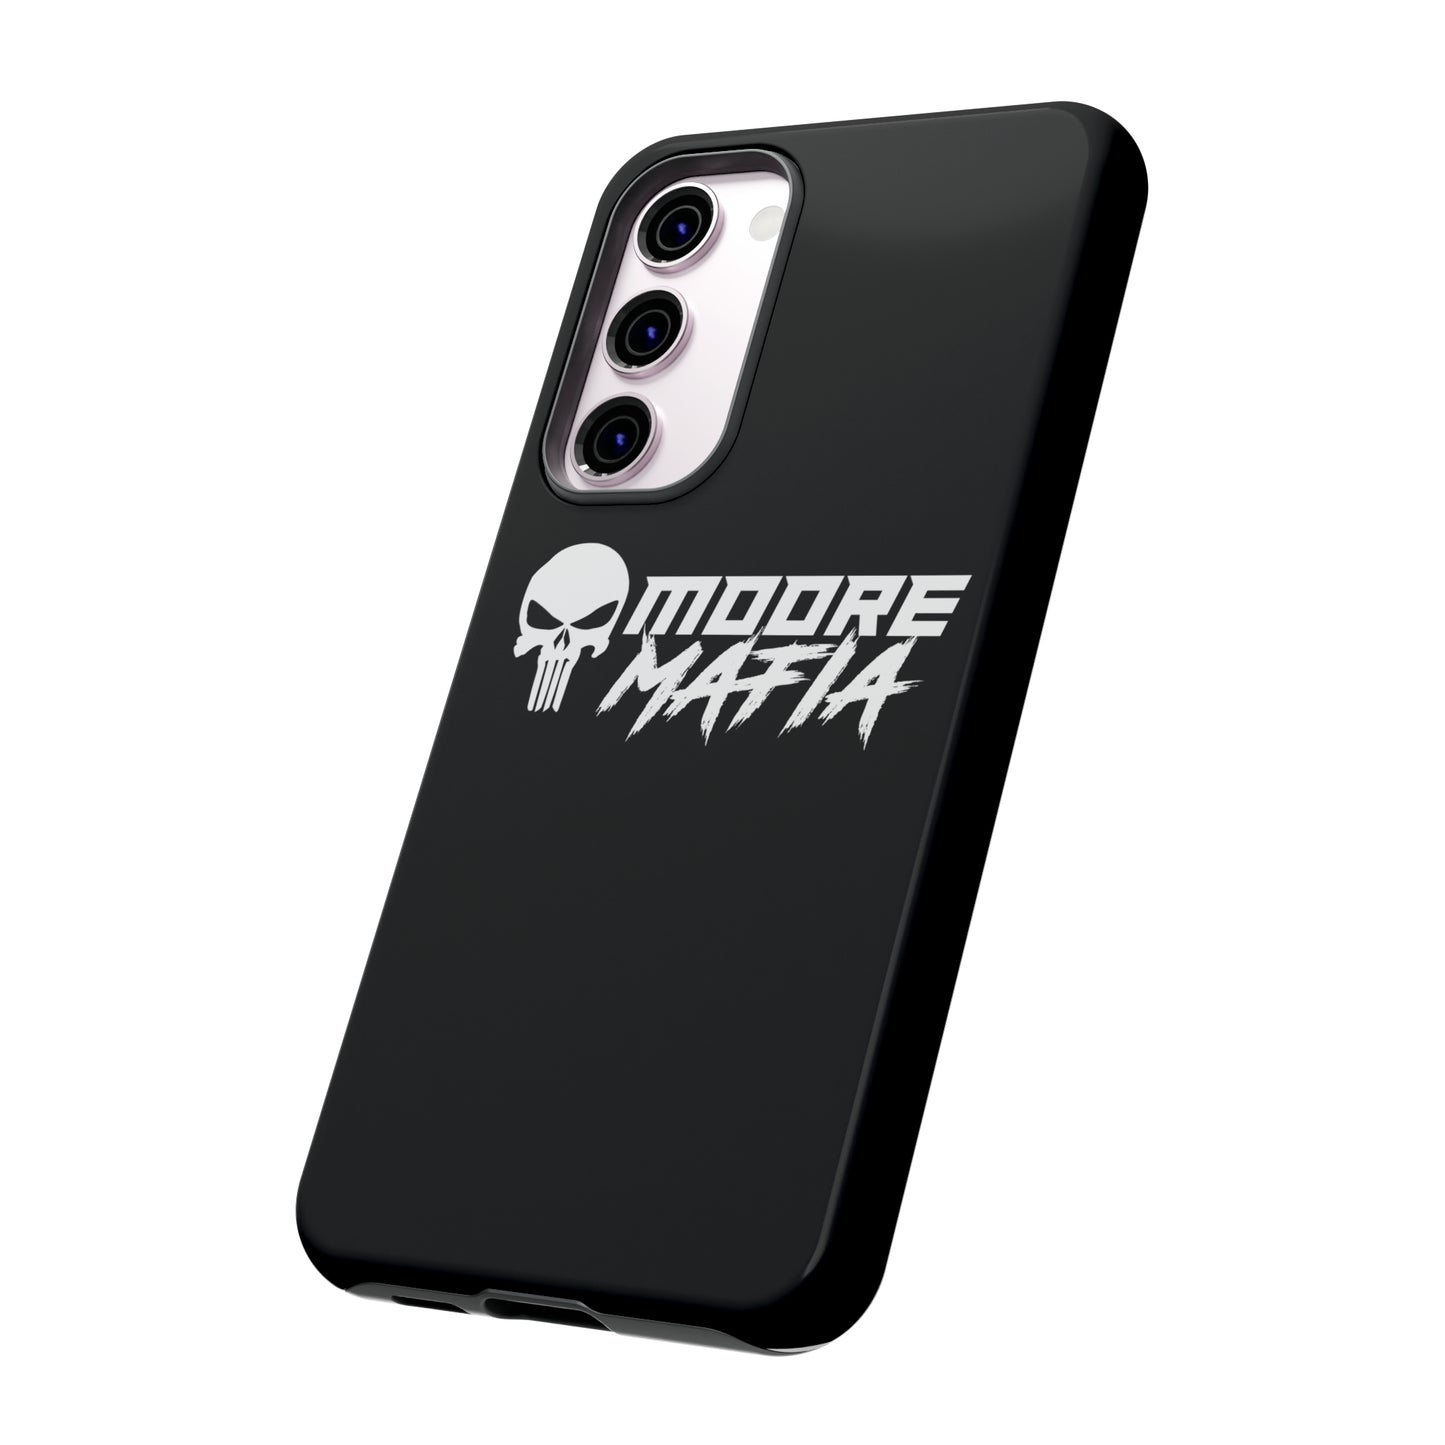 Moore Mafia White Phone Case